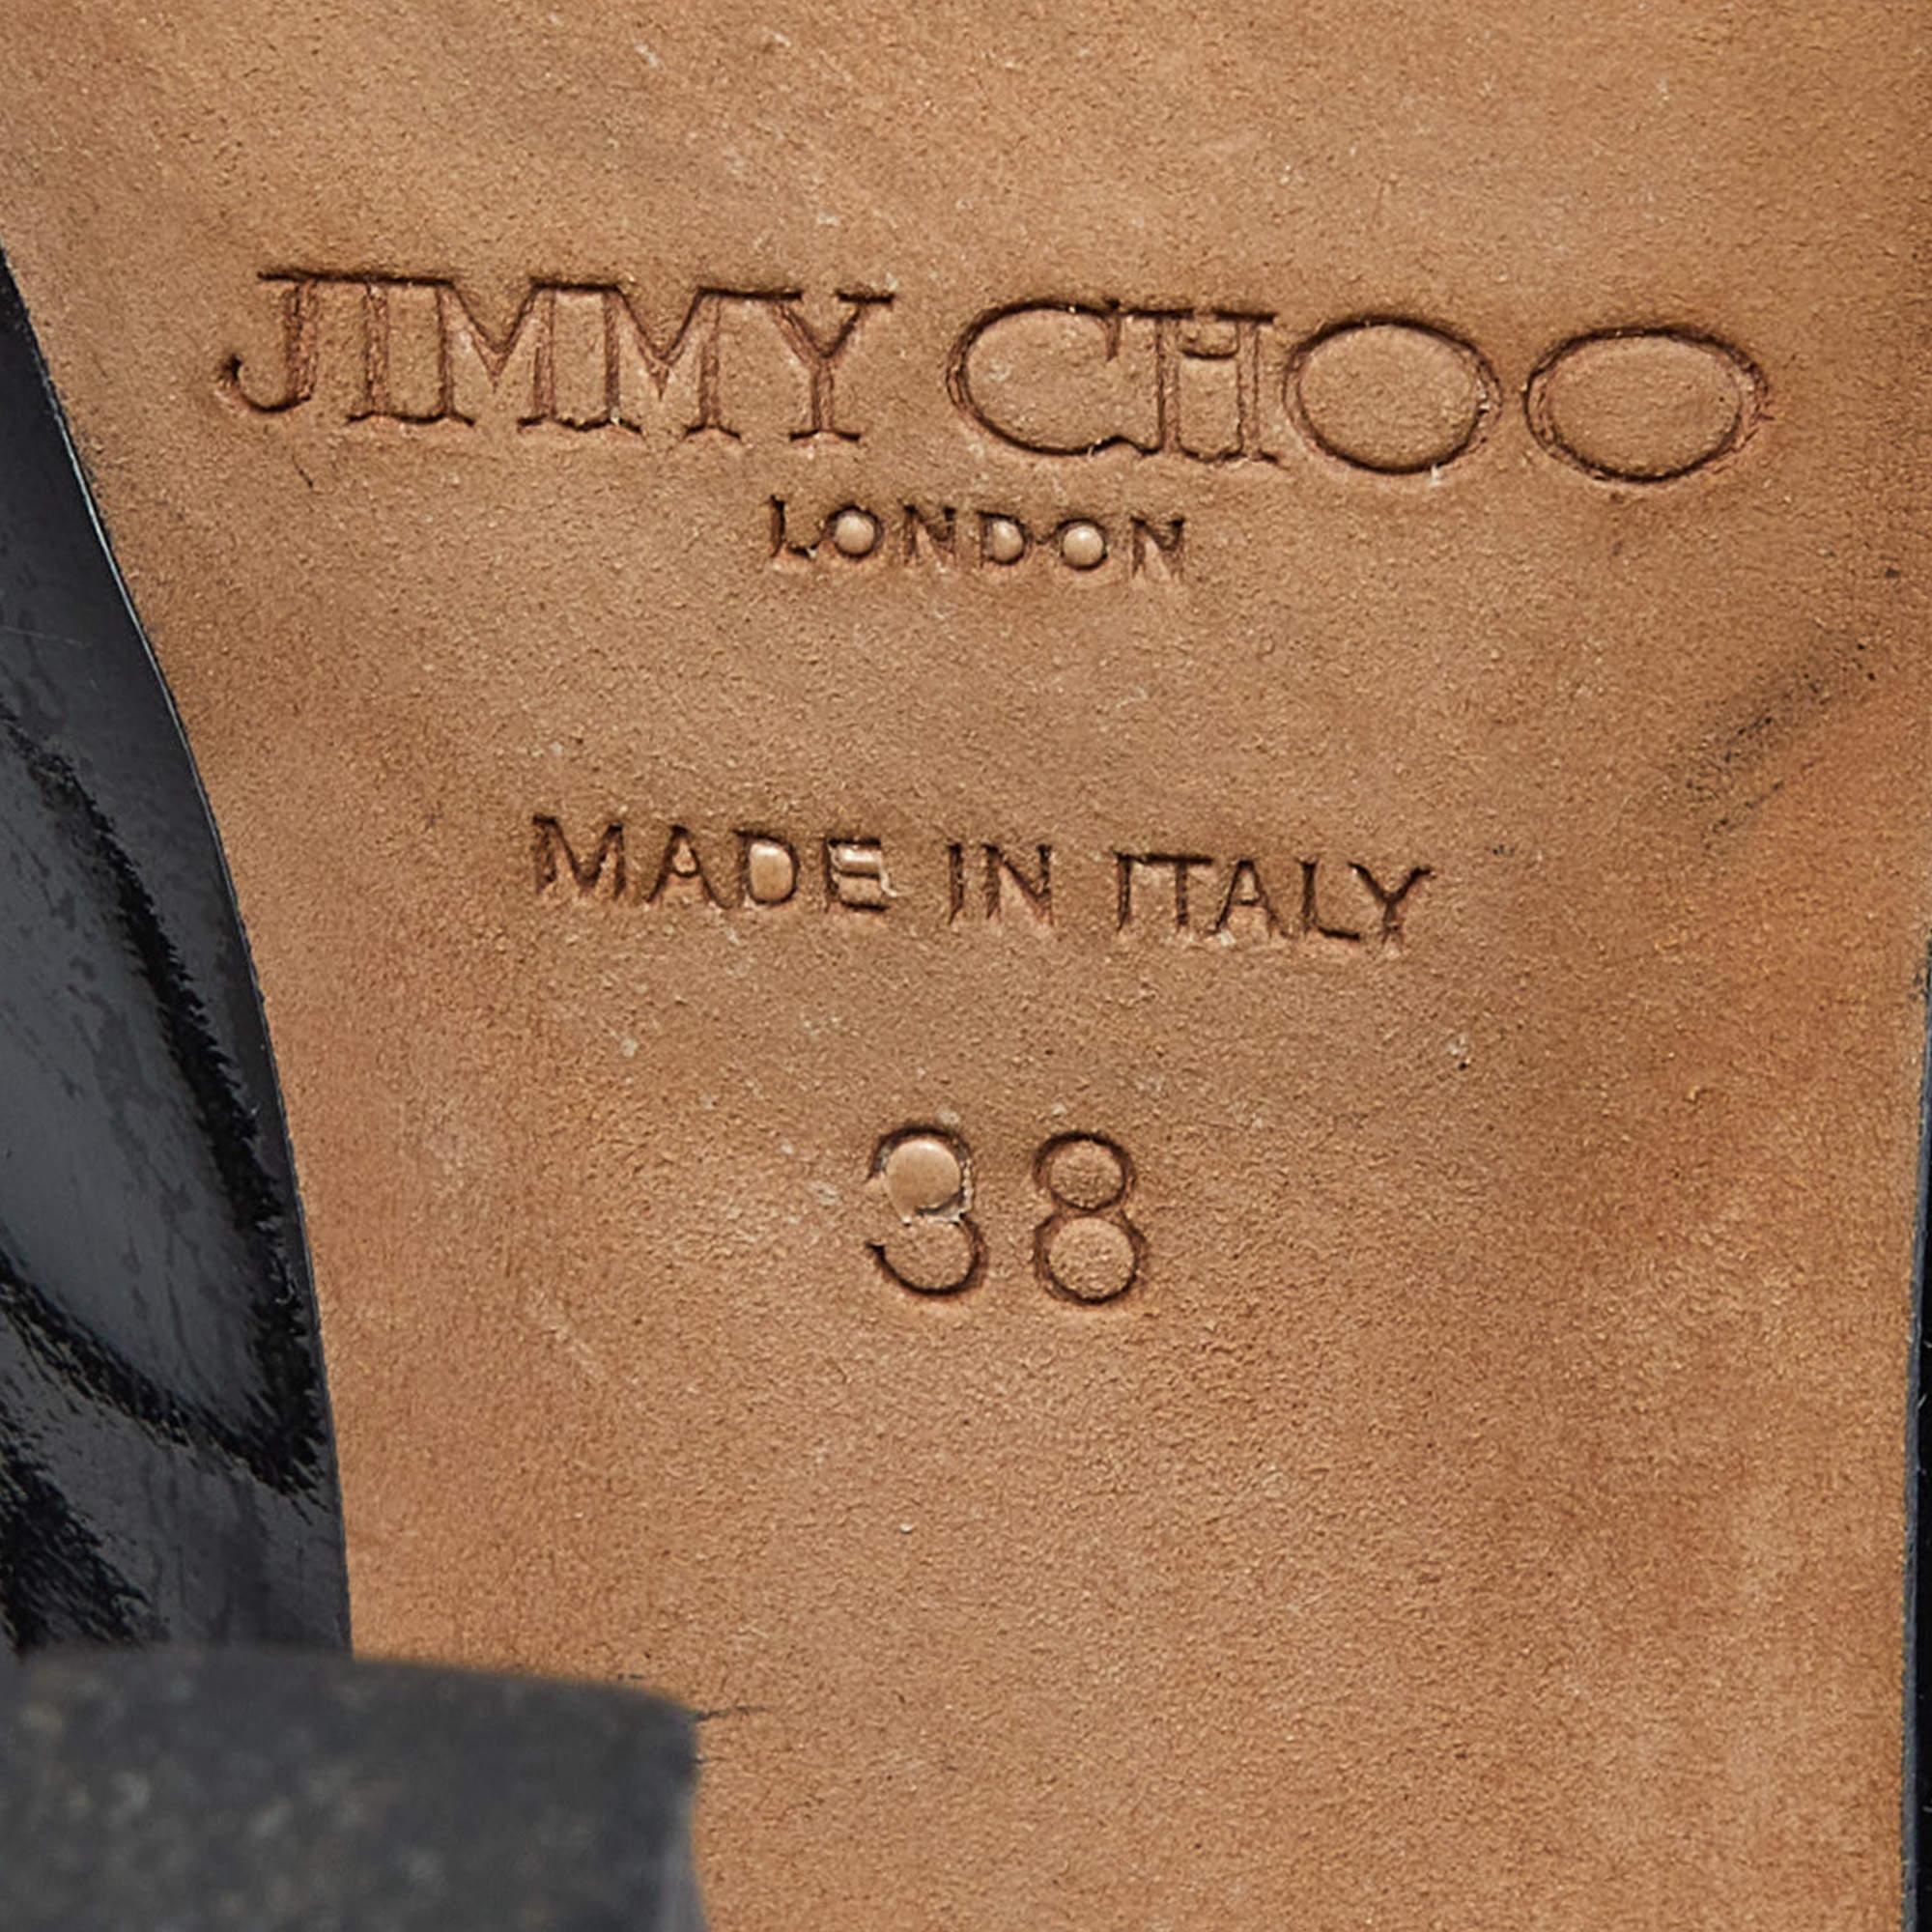 Jimmy Choo Black Patent Leather Peep Toe Platform Pumps Size 38 For Sale 3